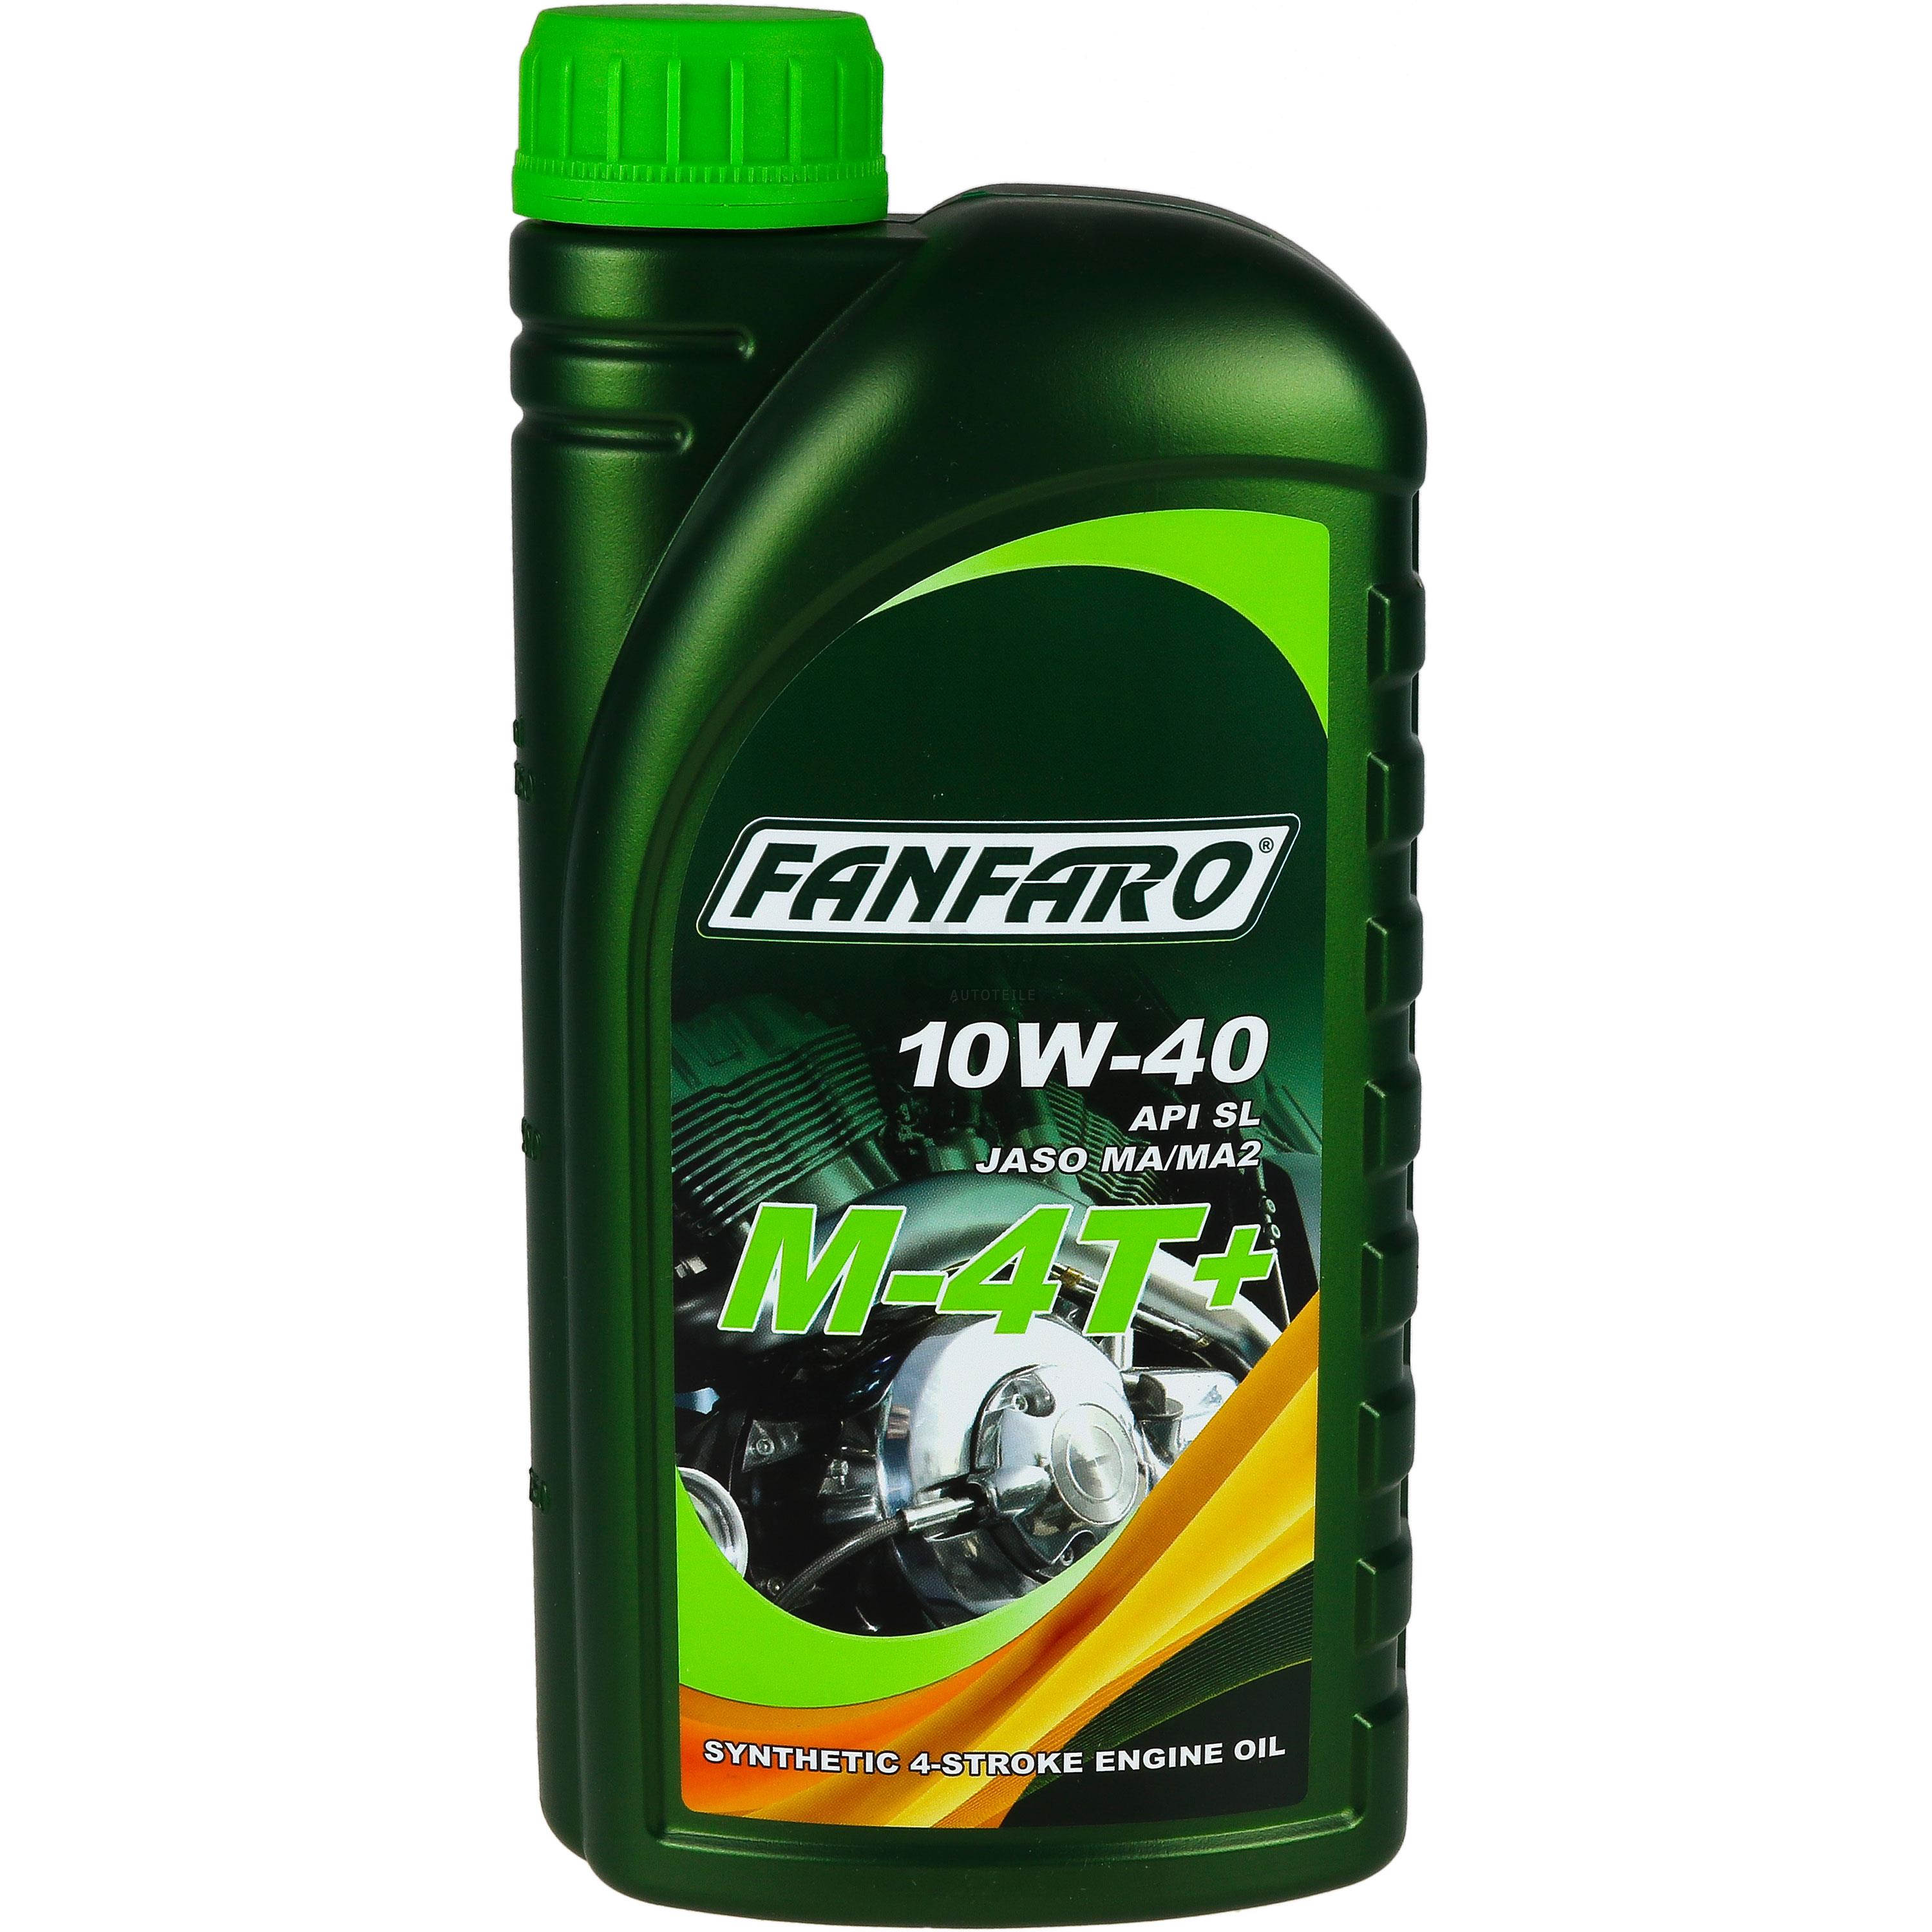 1 Liter  FANFARO Motorradöl M-4T+ API SL 10W-40 JASO MA/MA2 Synthetisch